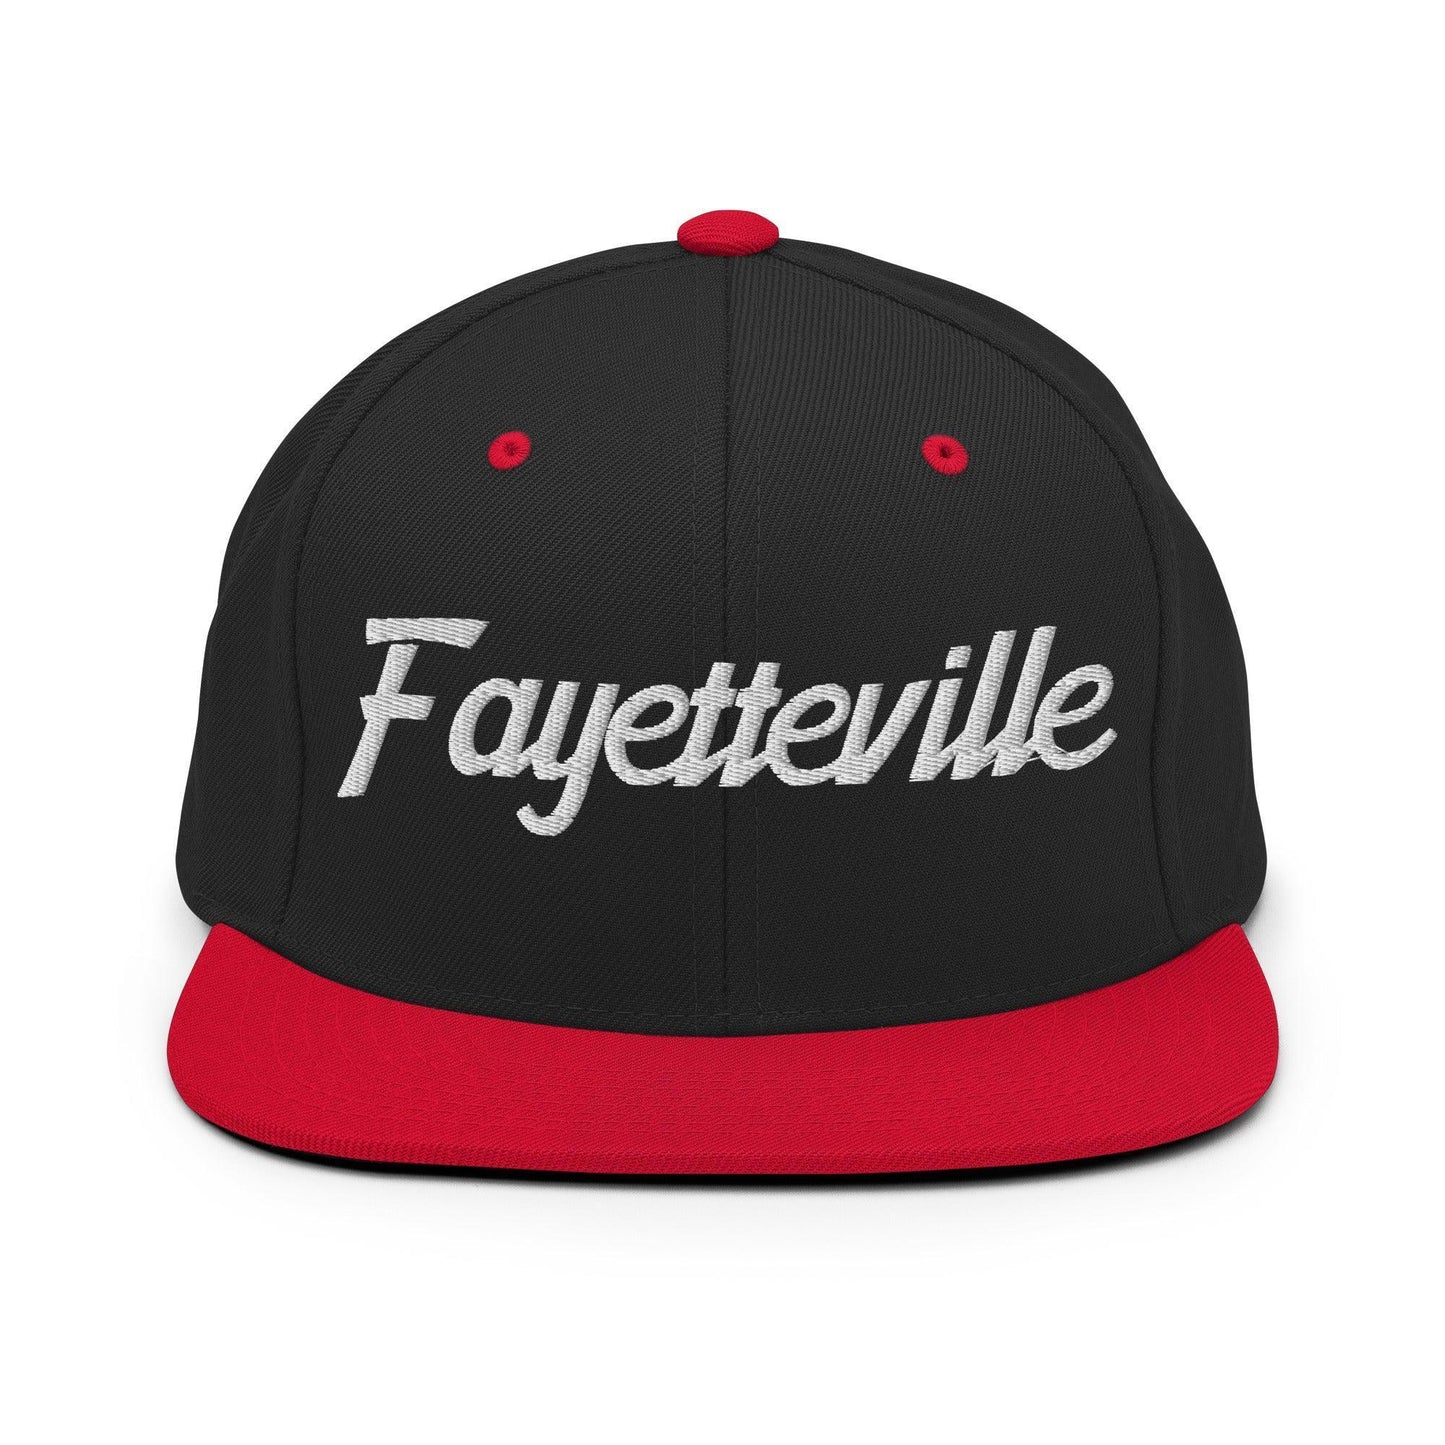 Fayetteville Script Snapback Hat Black Red